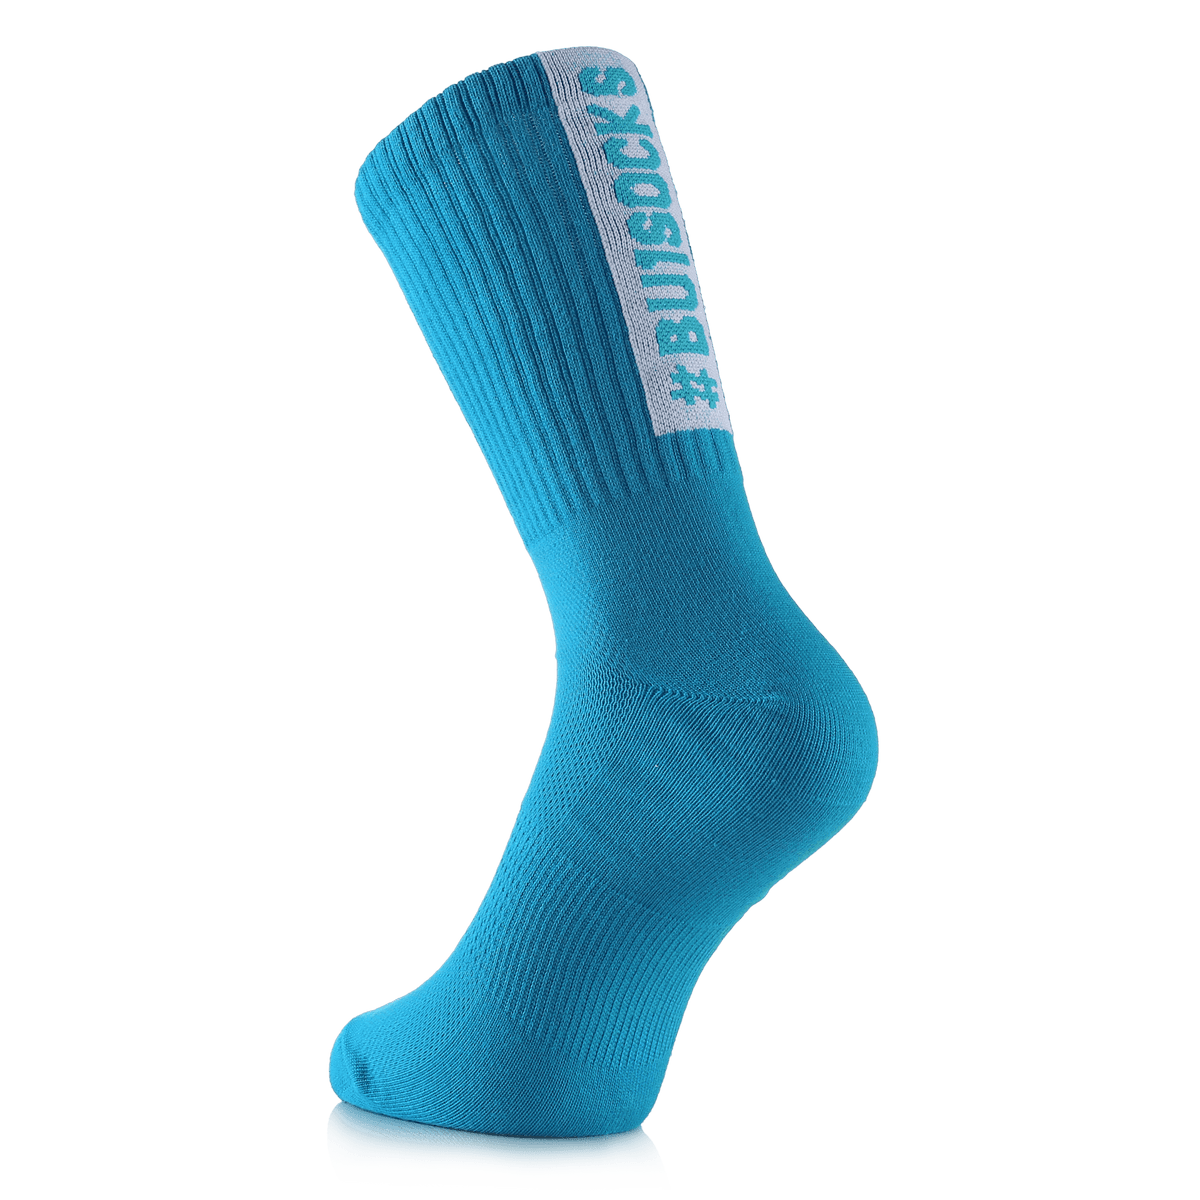 Calcetines deportivos BU1 azul